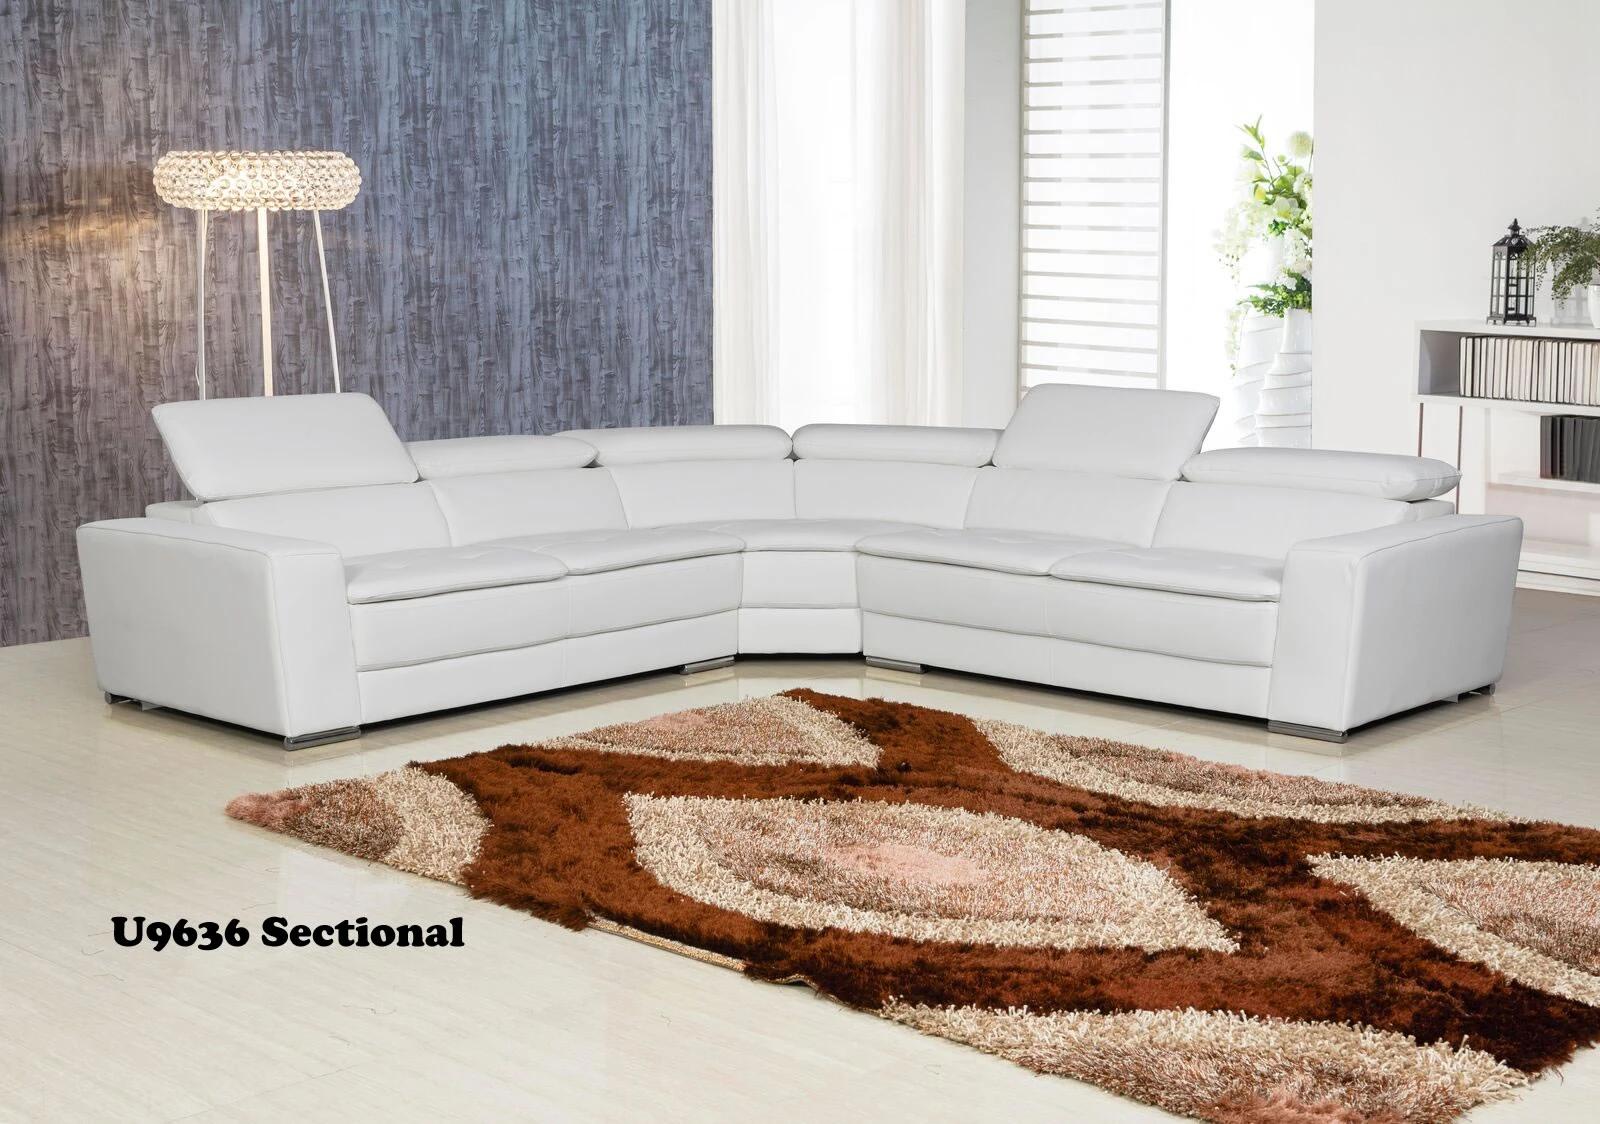 Contemporary Sectional Sofa U9636 SEC-WHITE U9636 SEC-WHITE in White leather gel